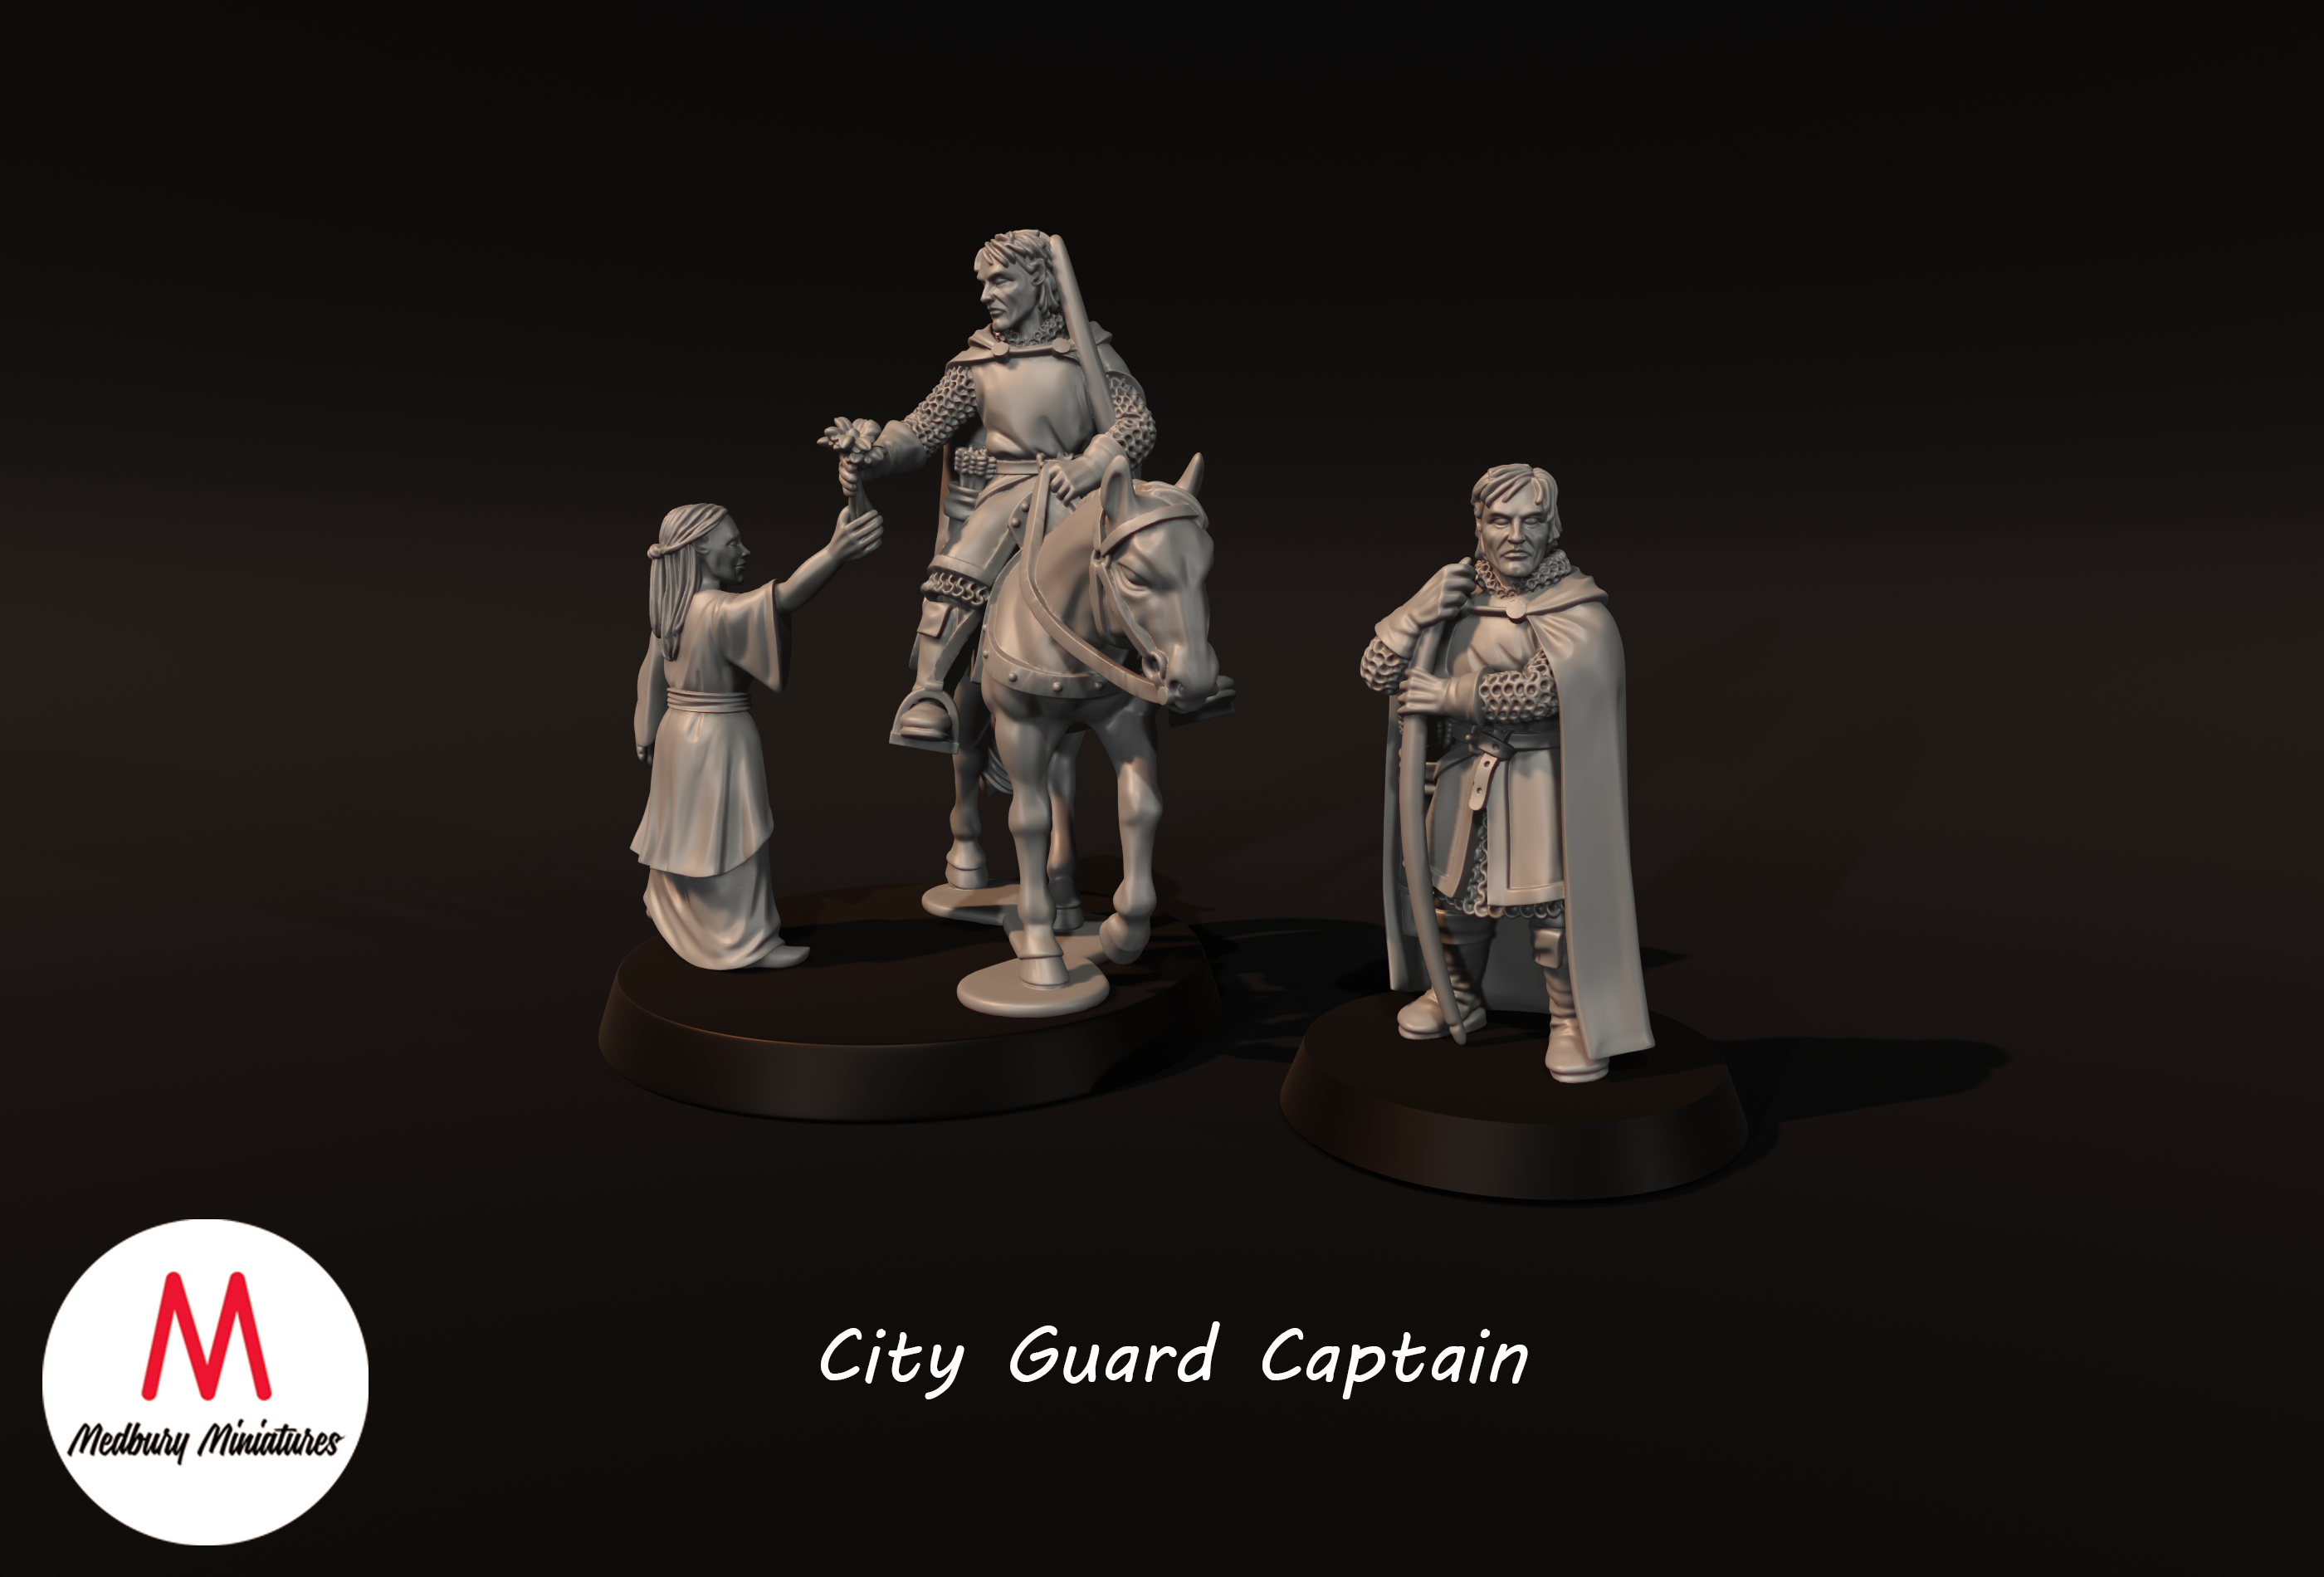 City Guard Captain - Medbury Miniatures